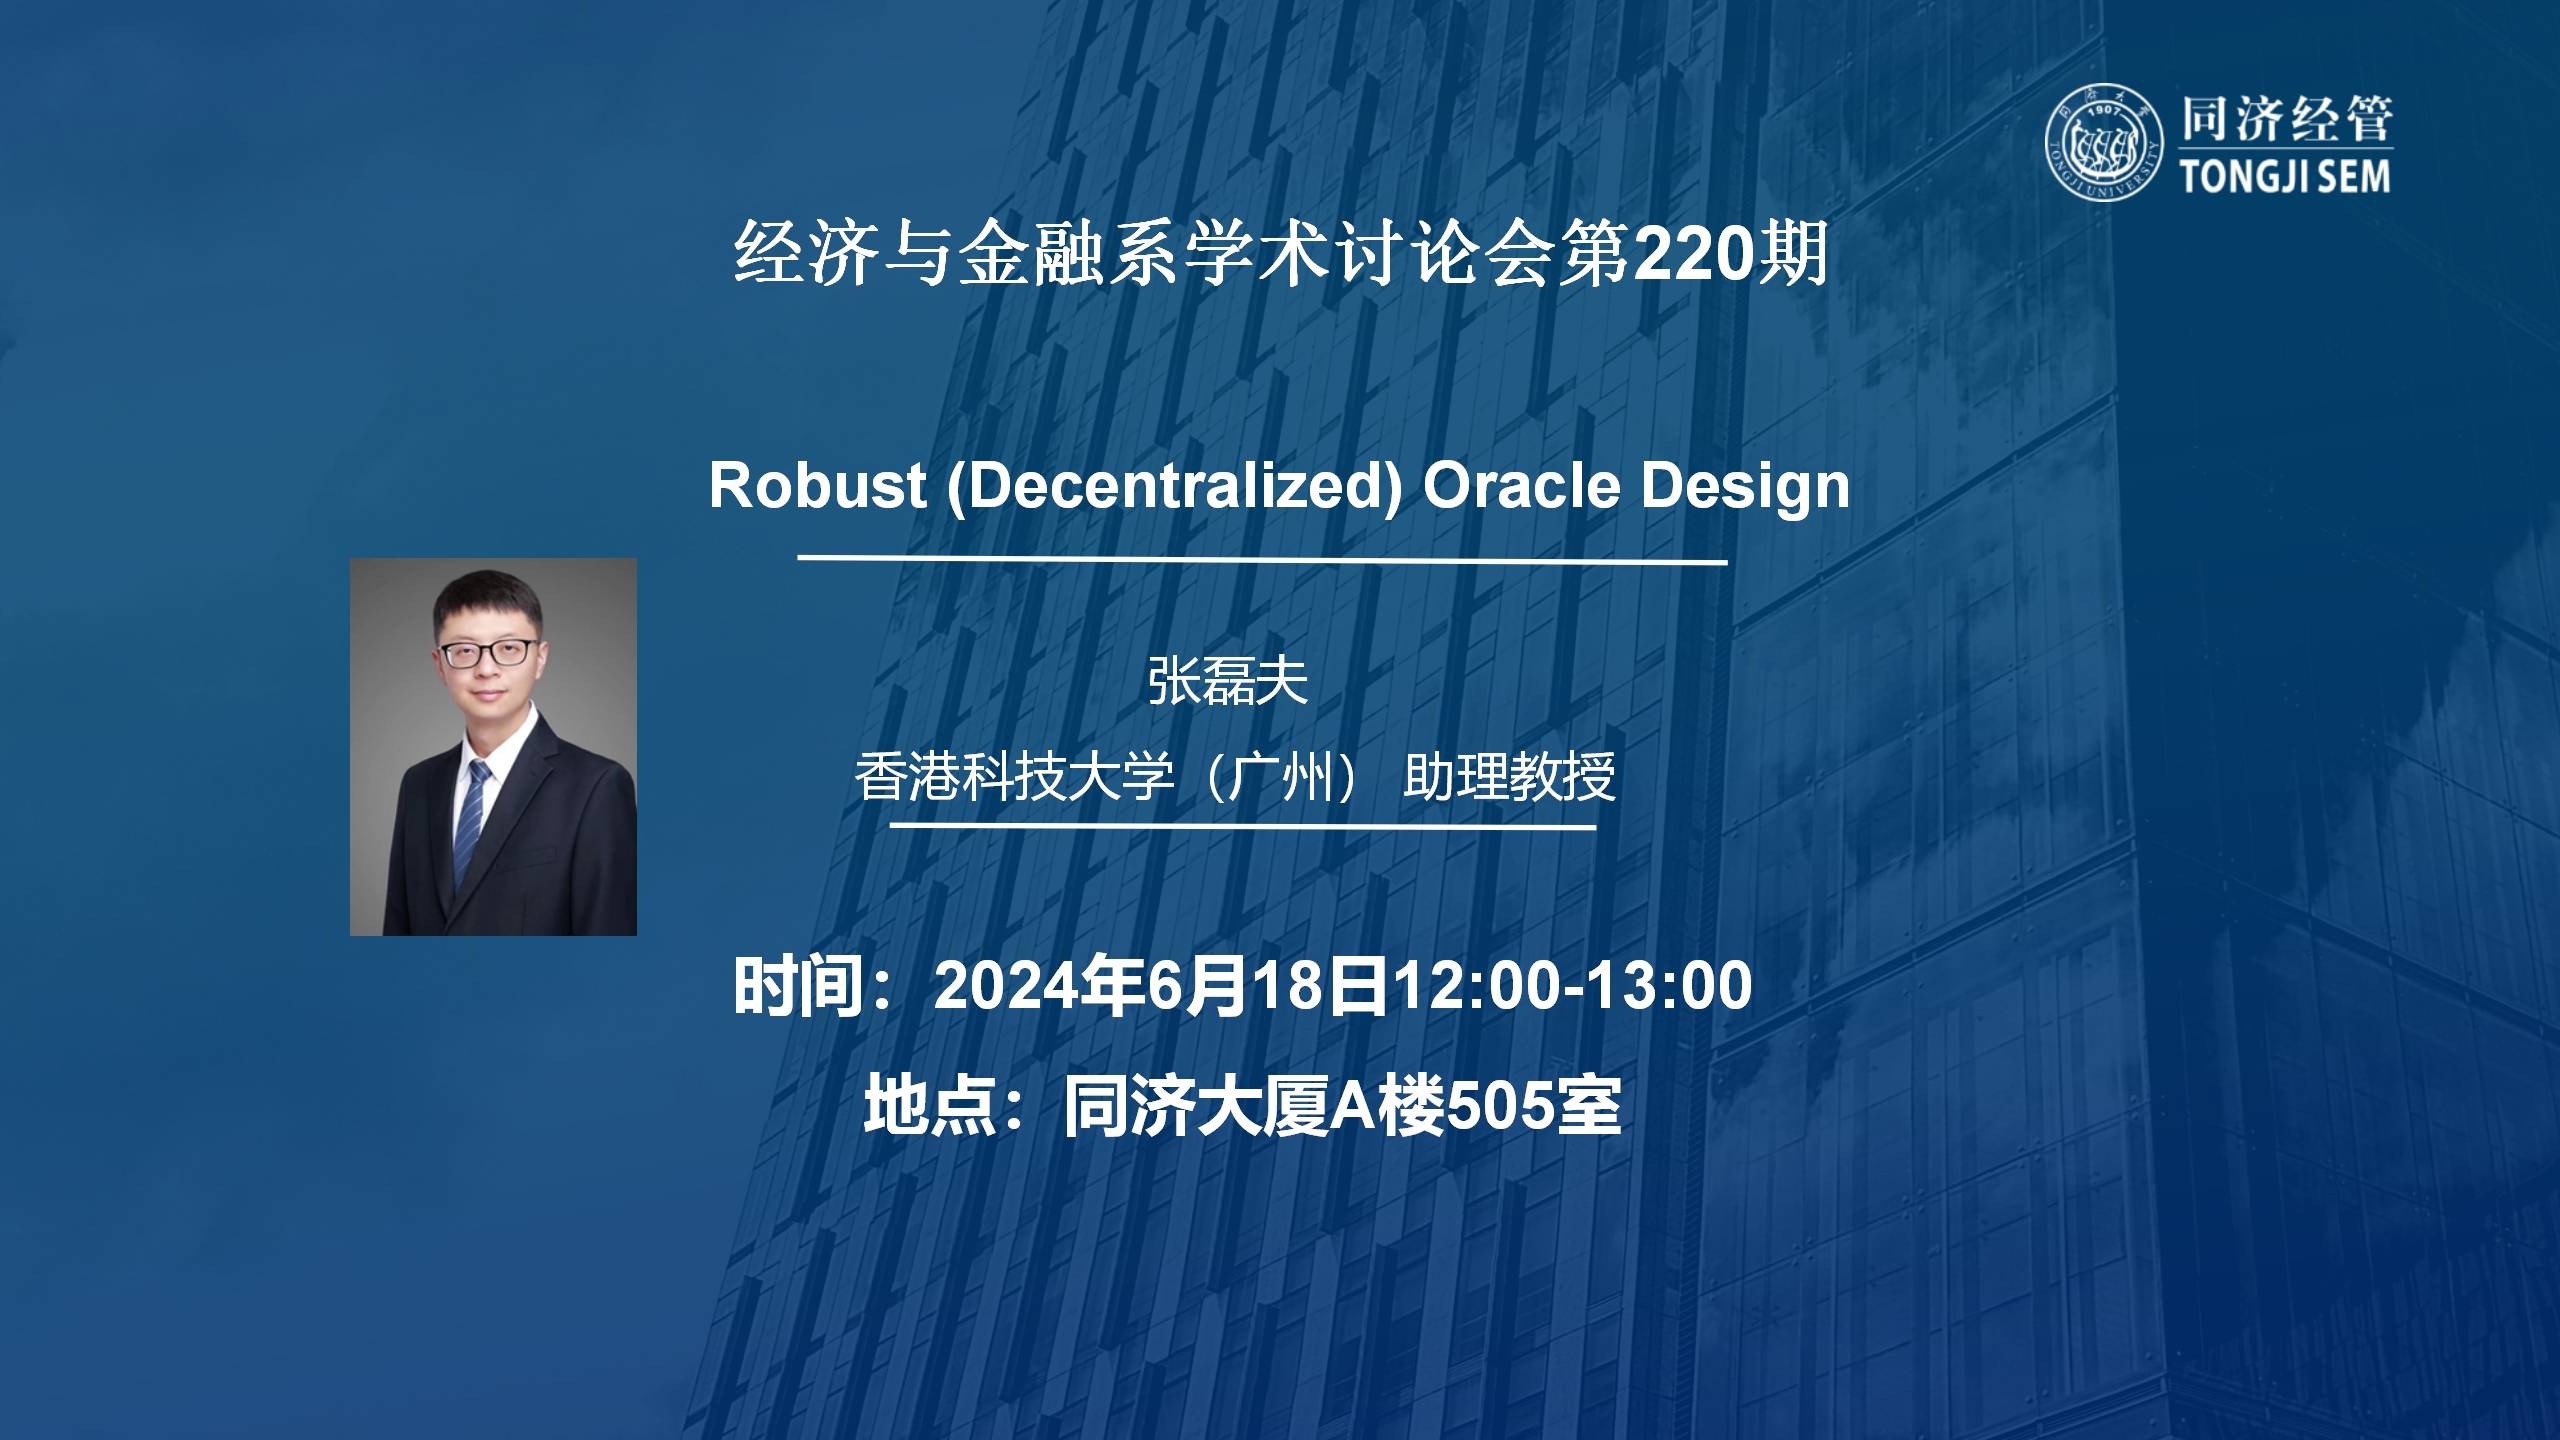 Robust (Decentralized) Oracle Design